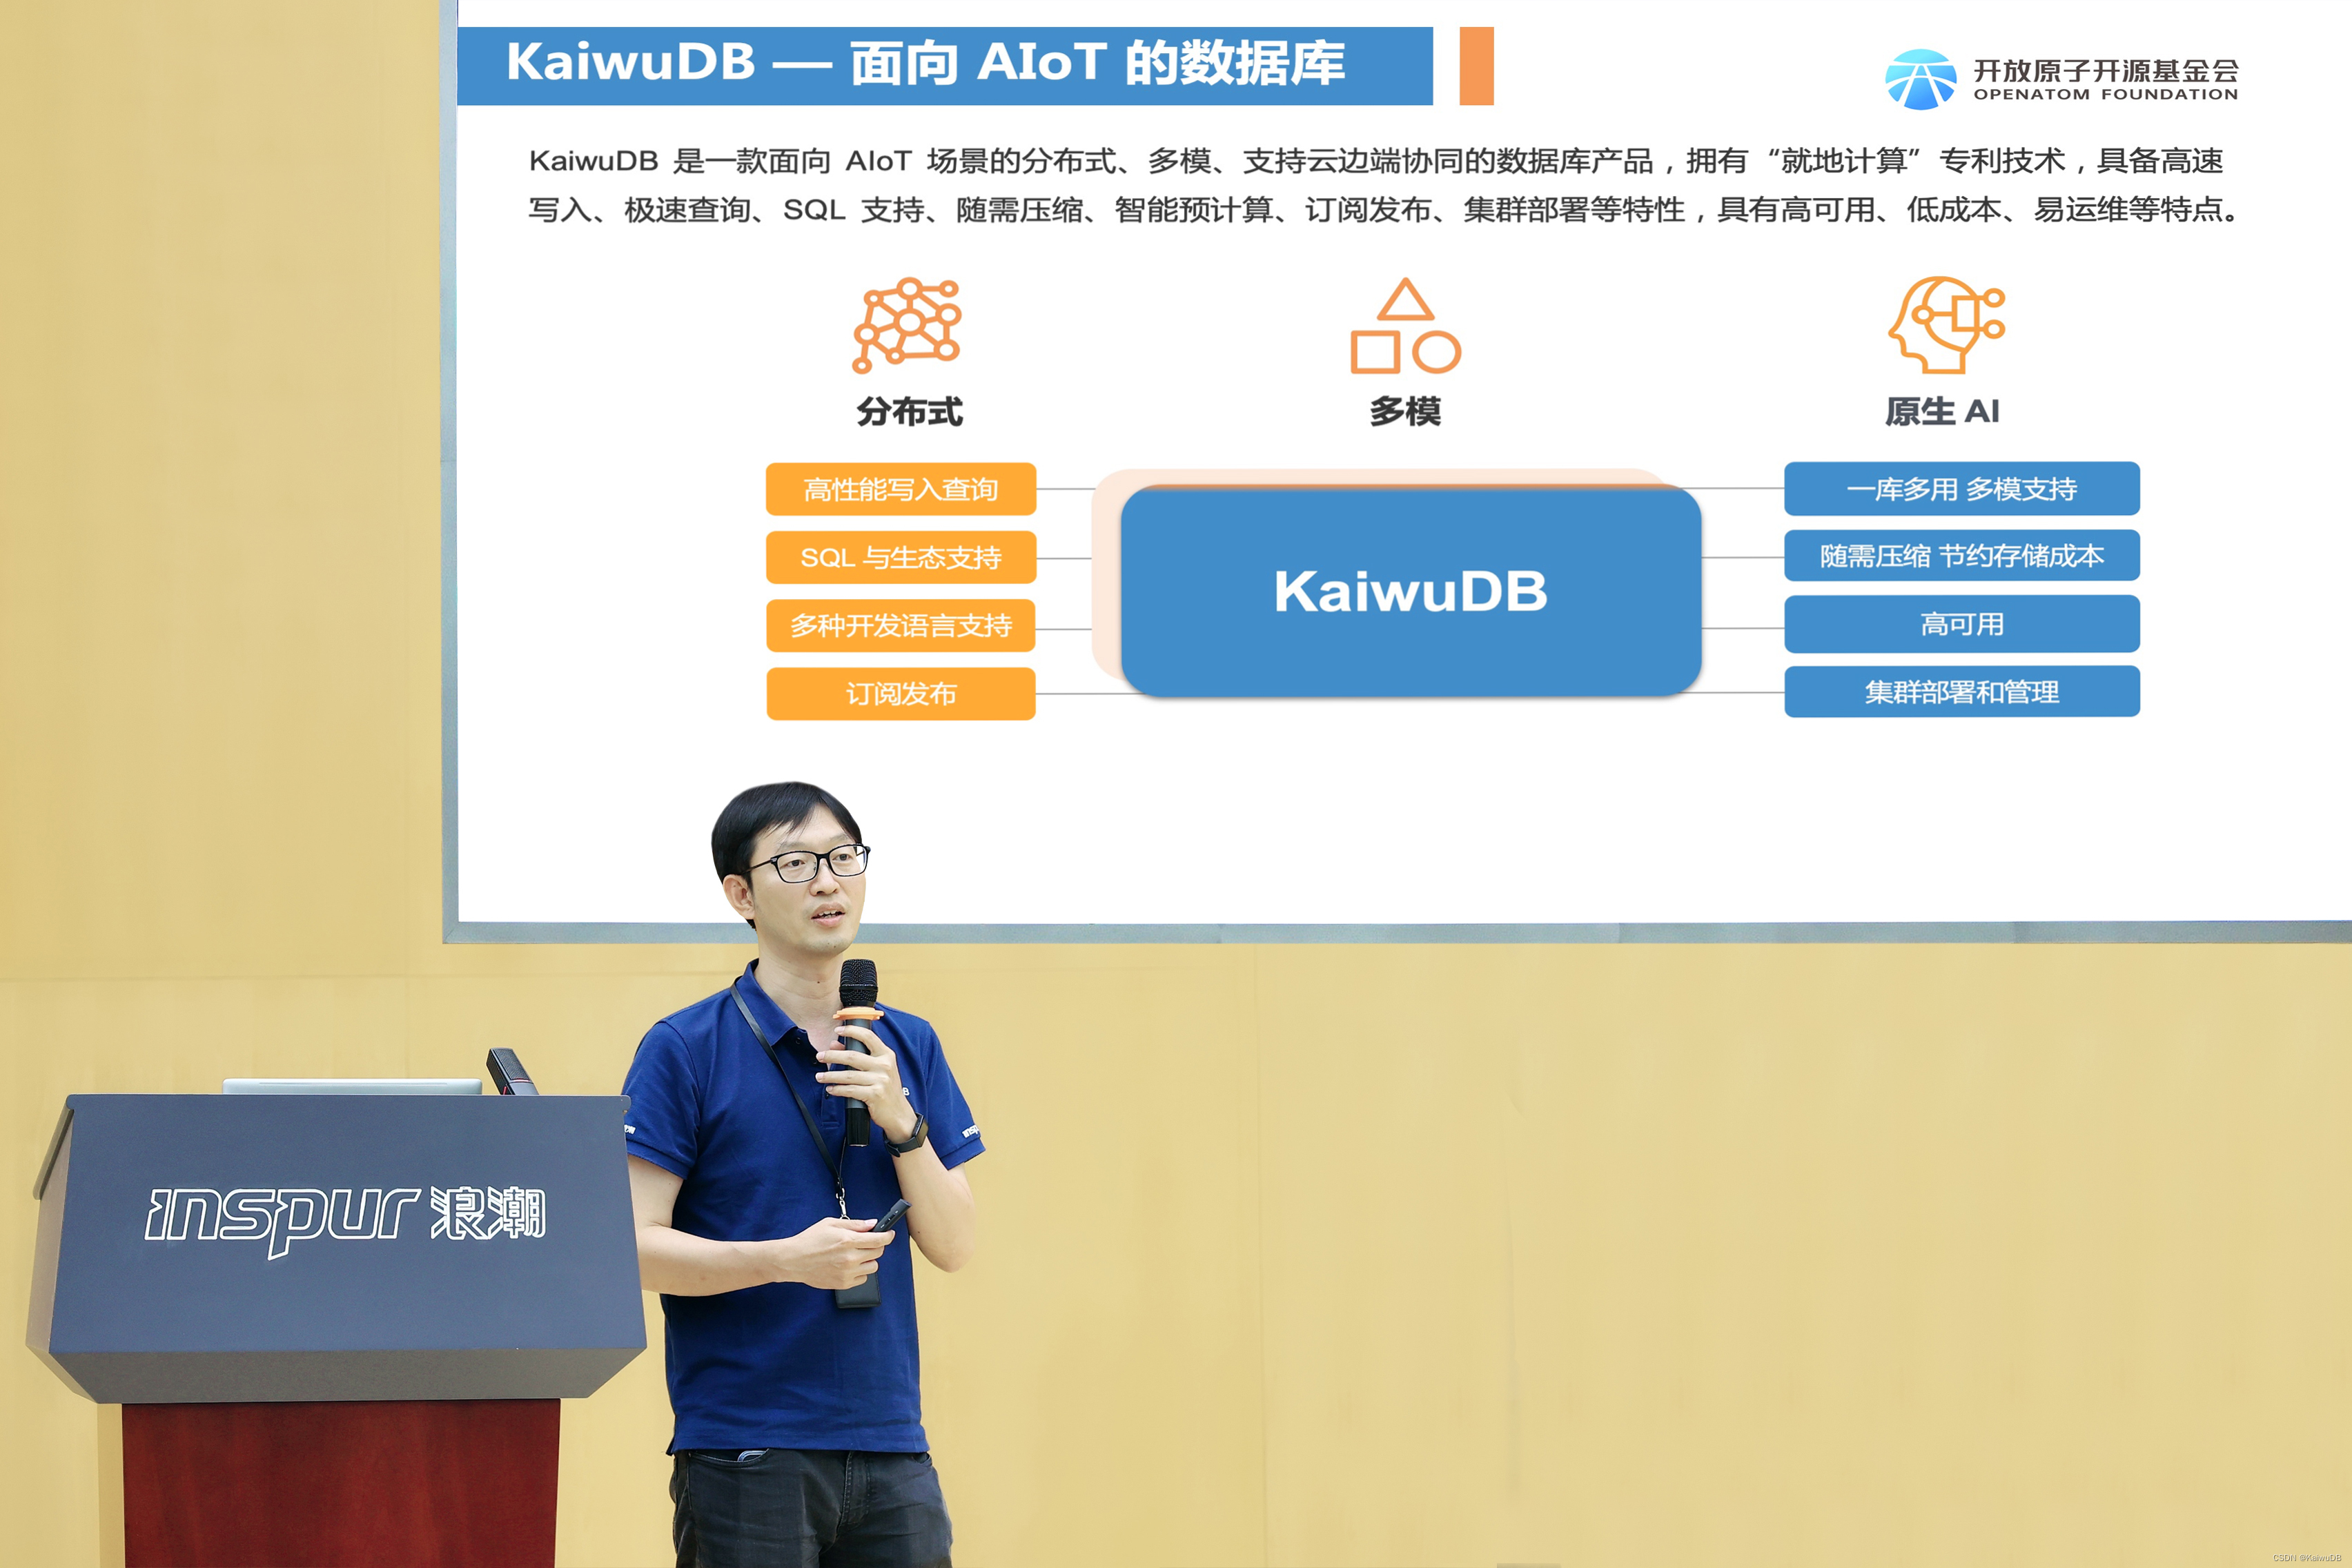 KaiwuDB CTO Wei Kewei delivered a keynote speech